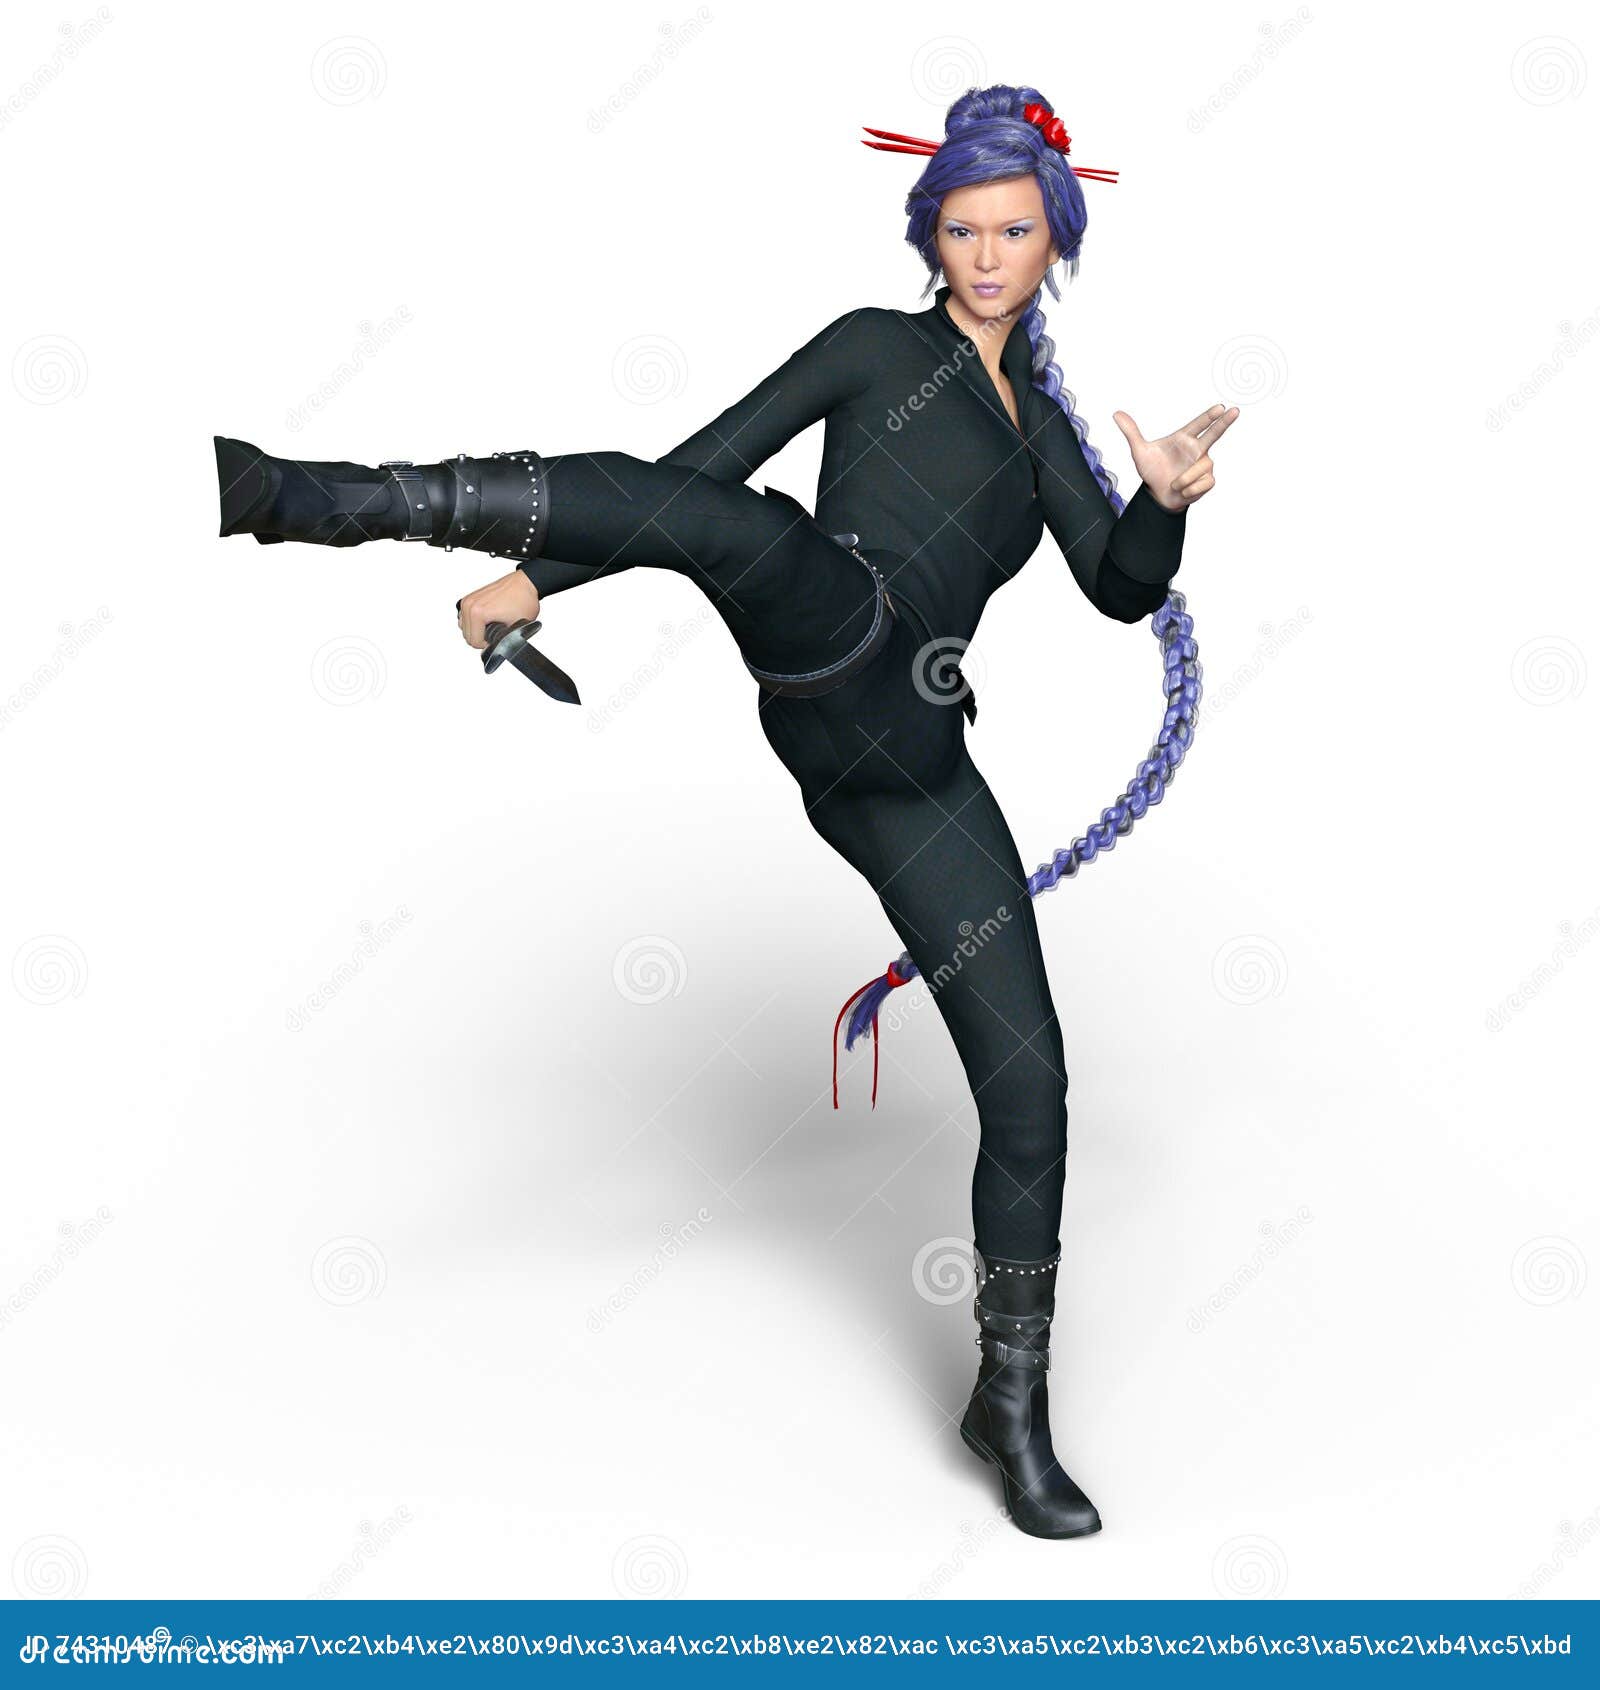 Female ninja in the style of Tite Kubo